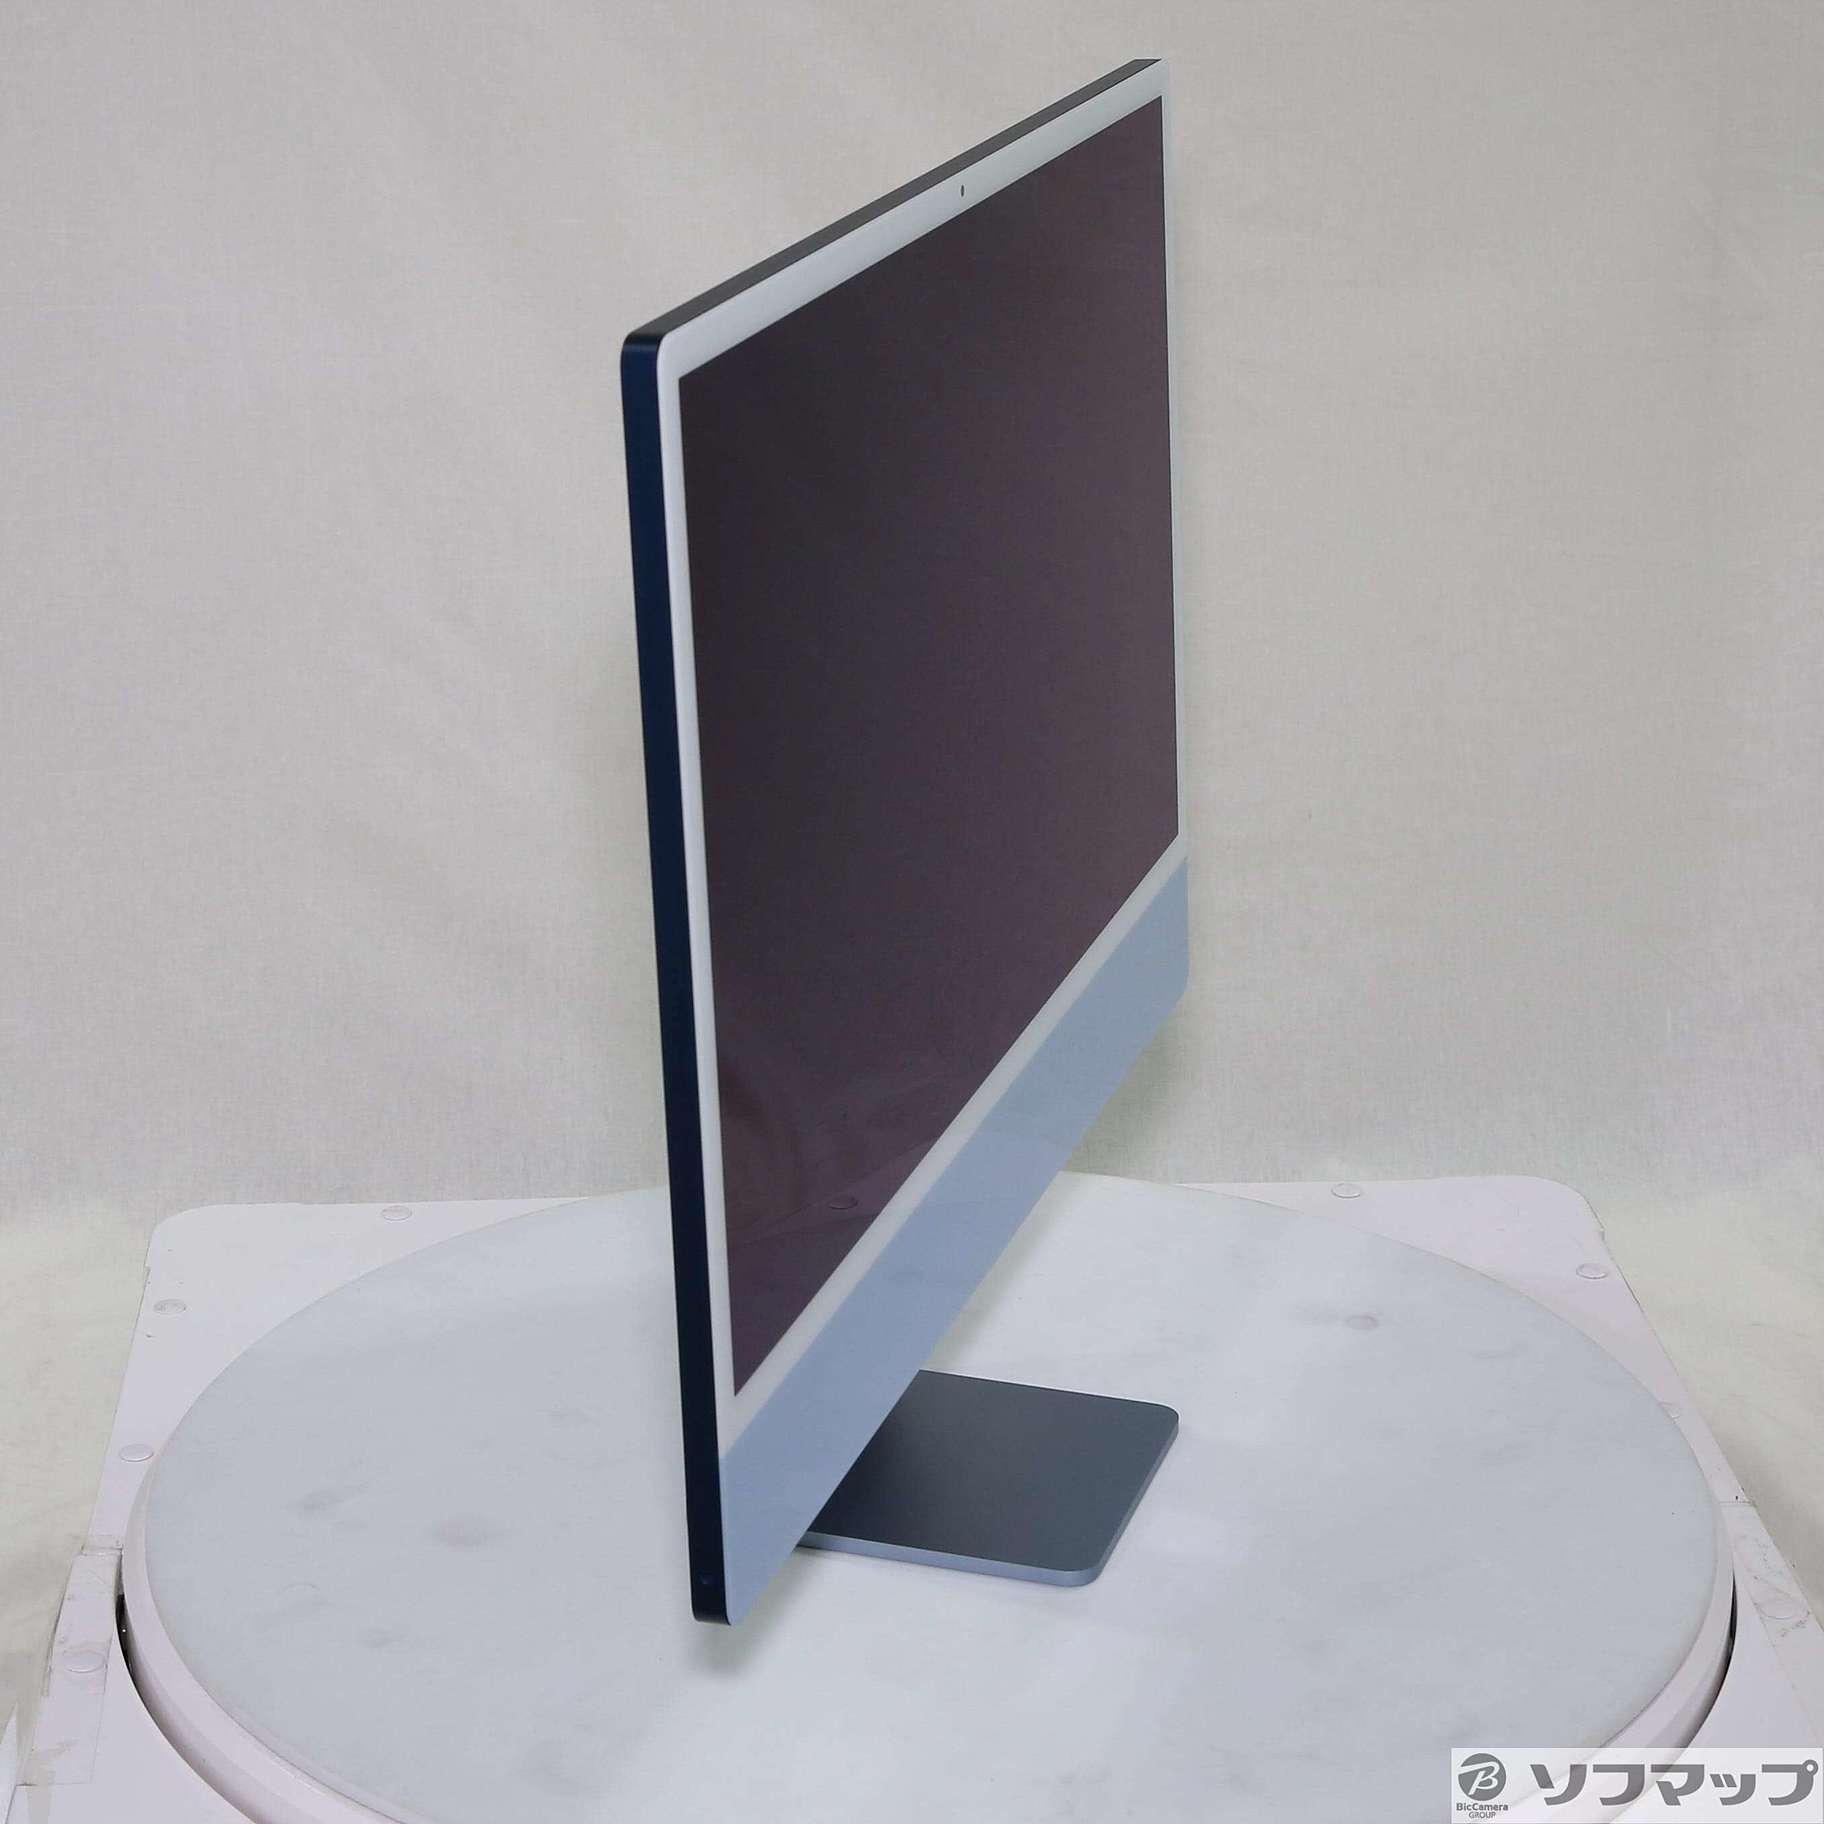 AppleiMac 24-inch Mid 2021 MJV93J／A